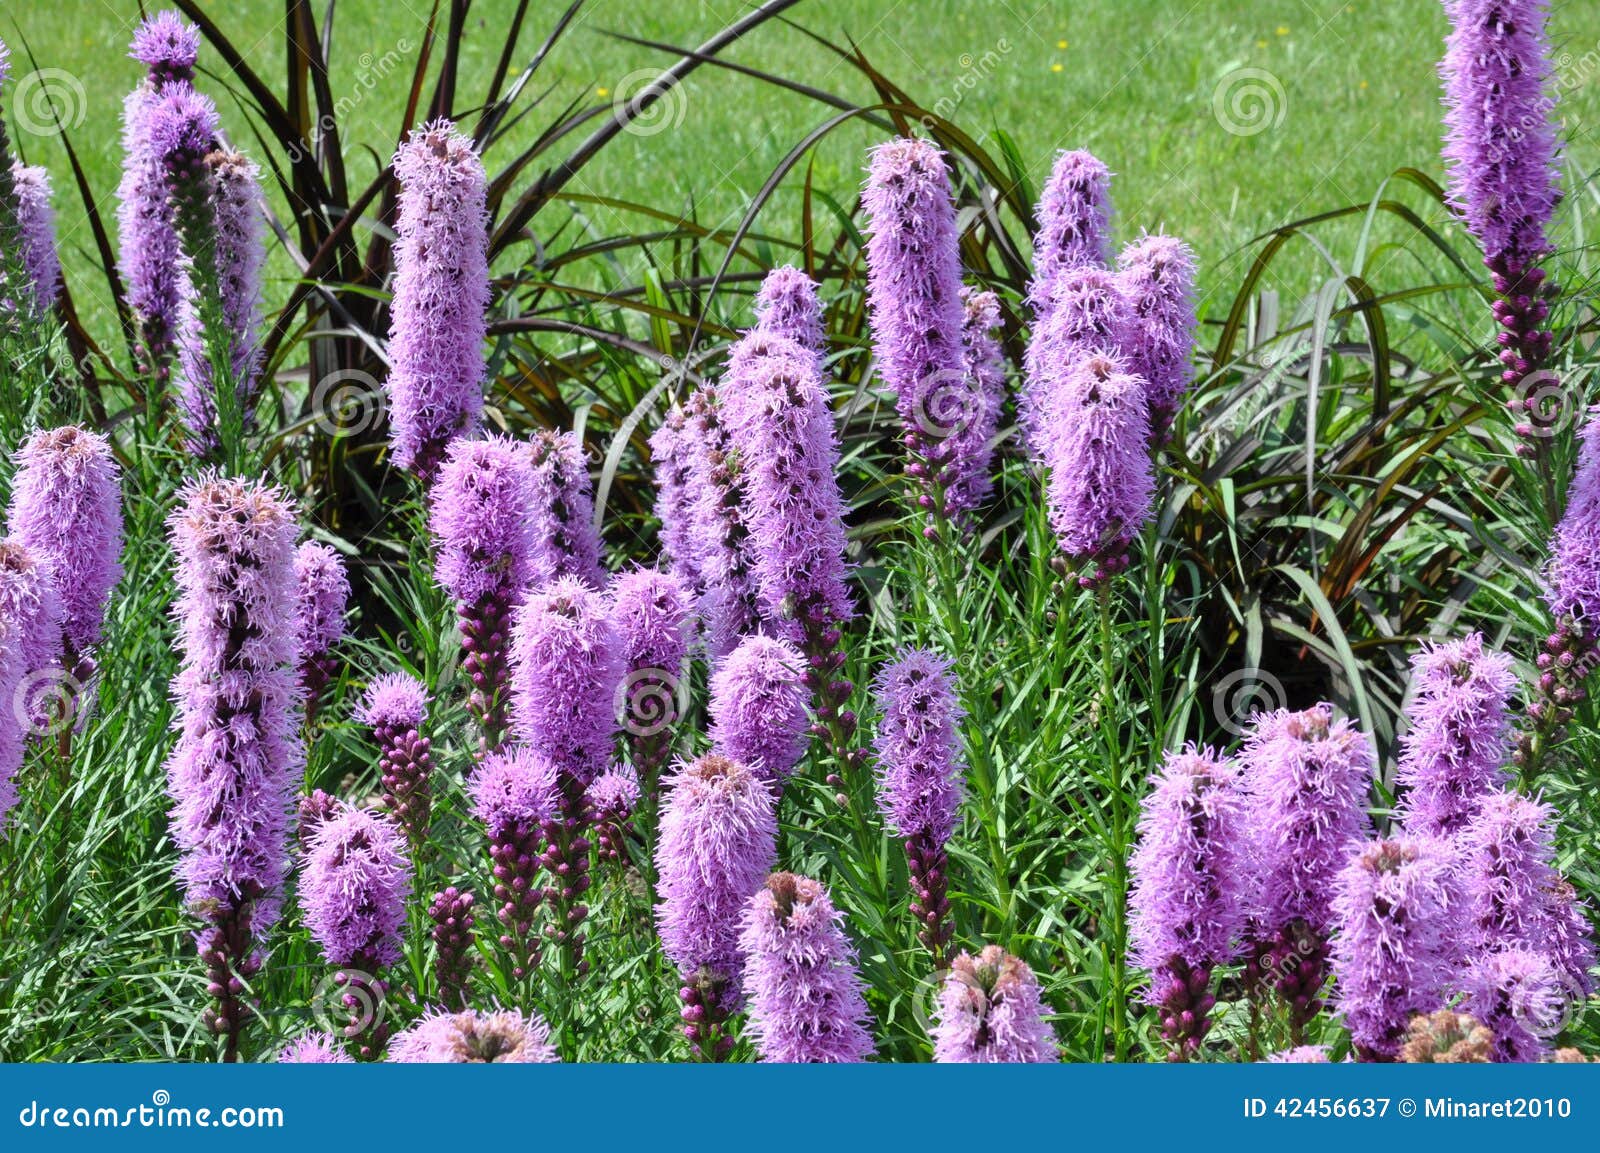 liatris spicata flowers